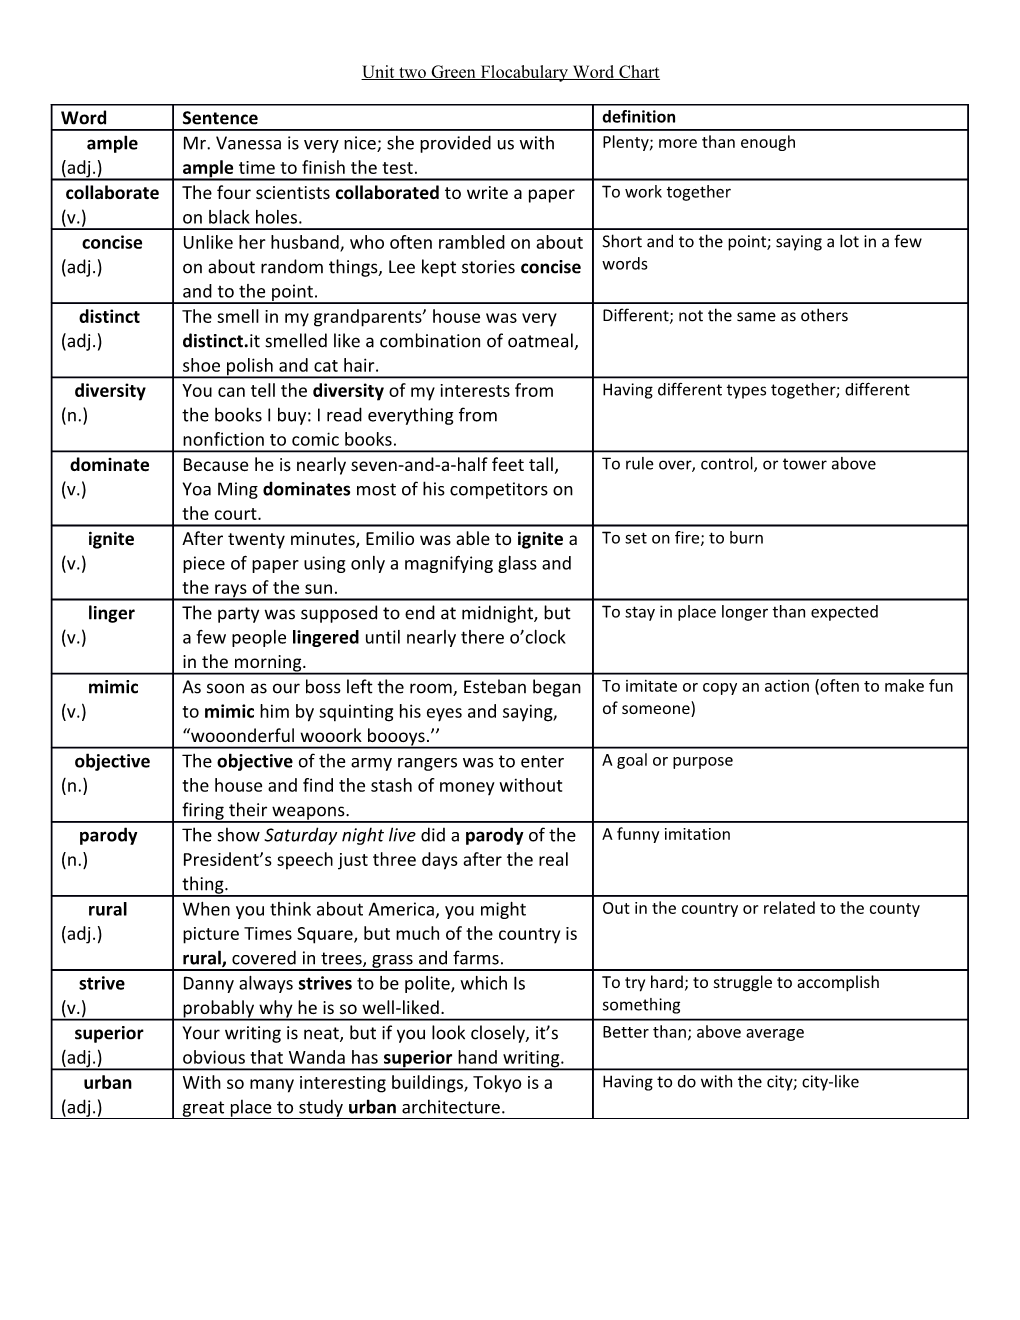 Unit Two Green Flocabularyword Chart